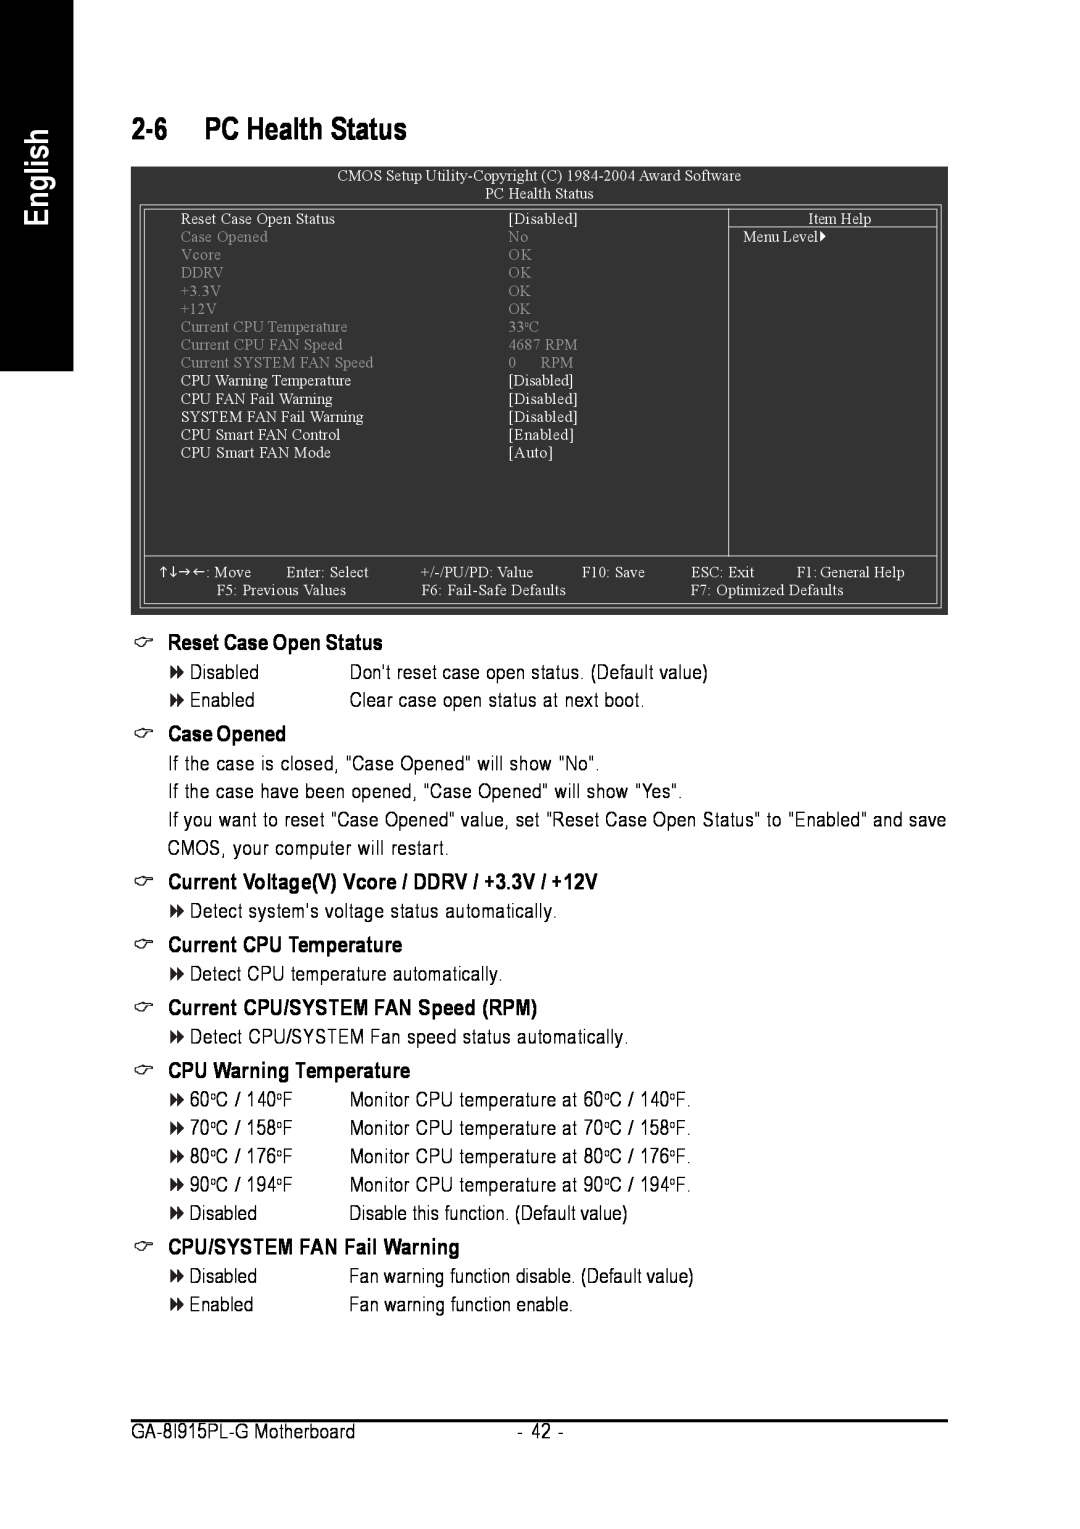 Intel GA-8I915PL-G PC Health Status, Case Opened, Current VoltageV Vcore / DDRV / +3.3V / +12V, Current CPU Temperature 